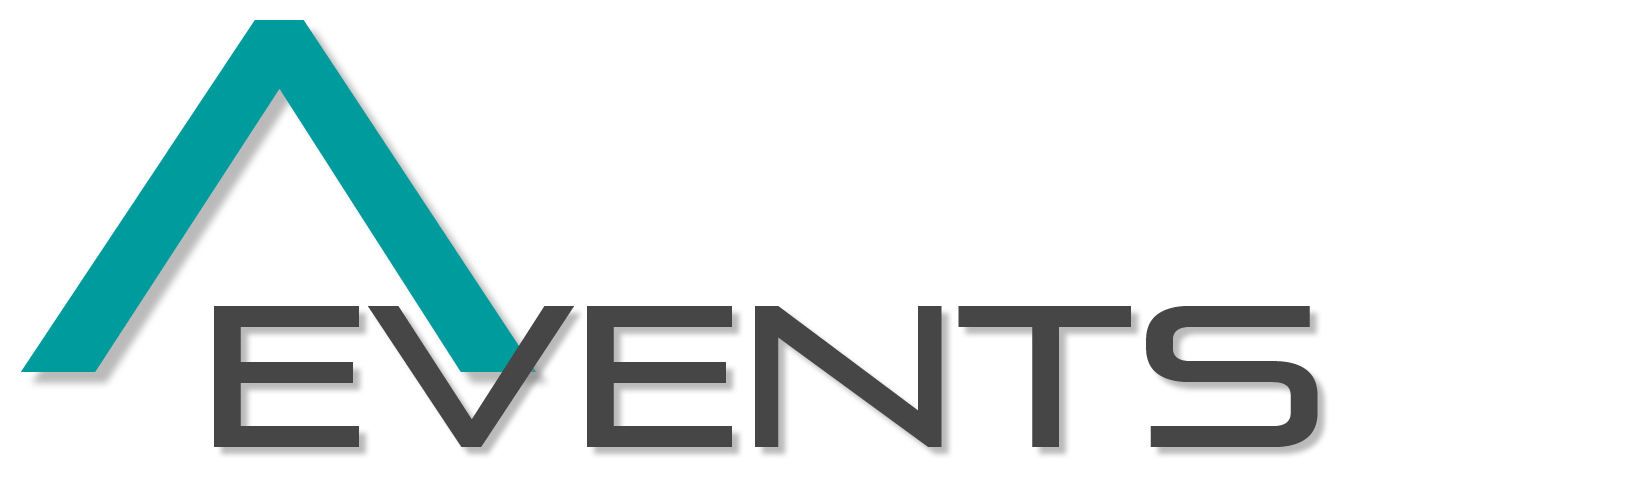 HC-Logo-Events-trans